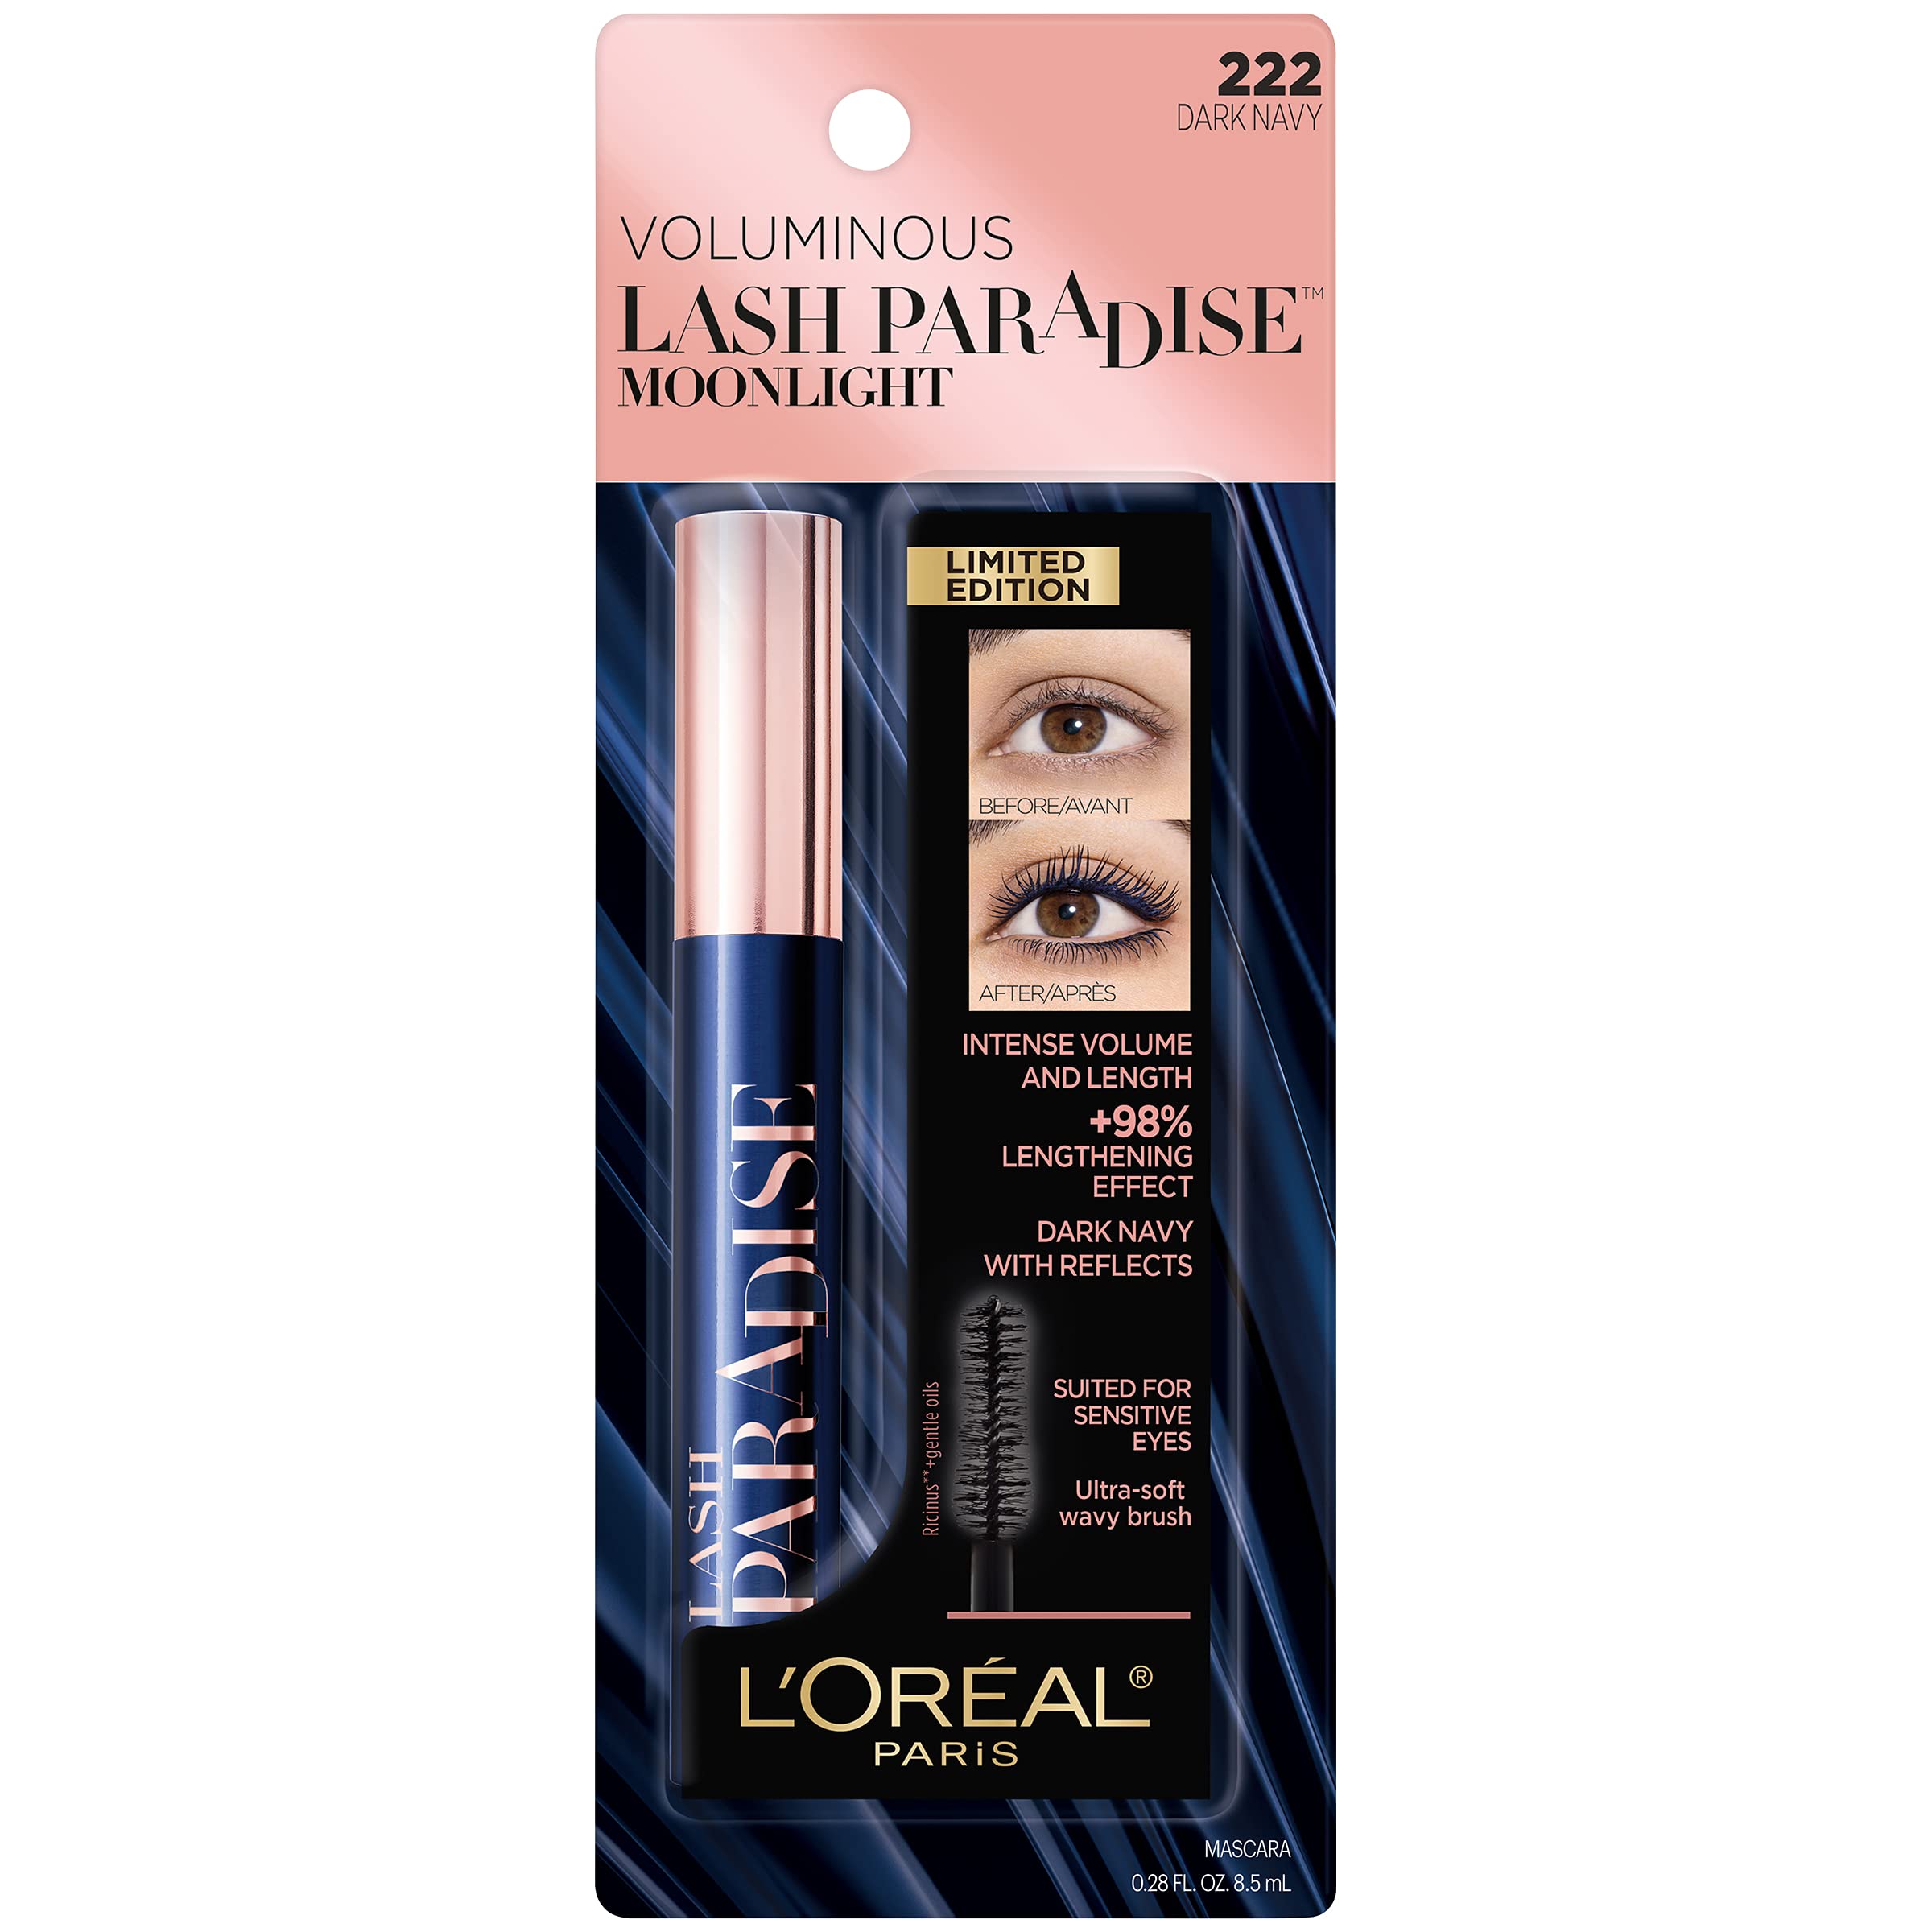 L'Oreal Paris Voluminous Makeup Lash Paradise Moonlight Mascara, voluptuous volume and intense length Mascara, Limited Edition, Dark Navy, 0.2 fl oz